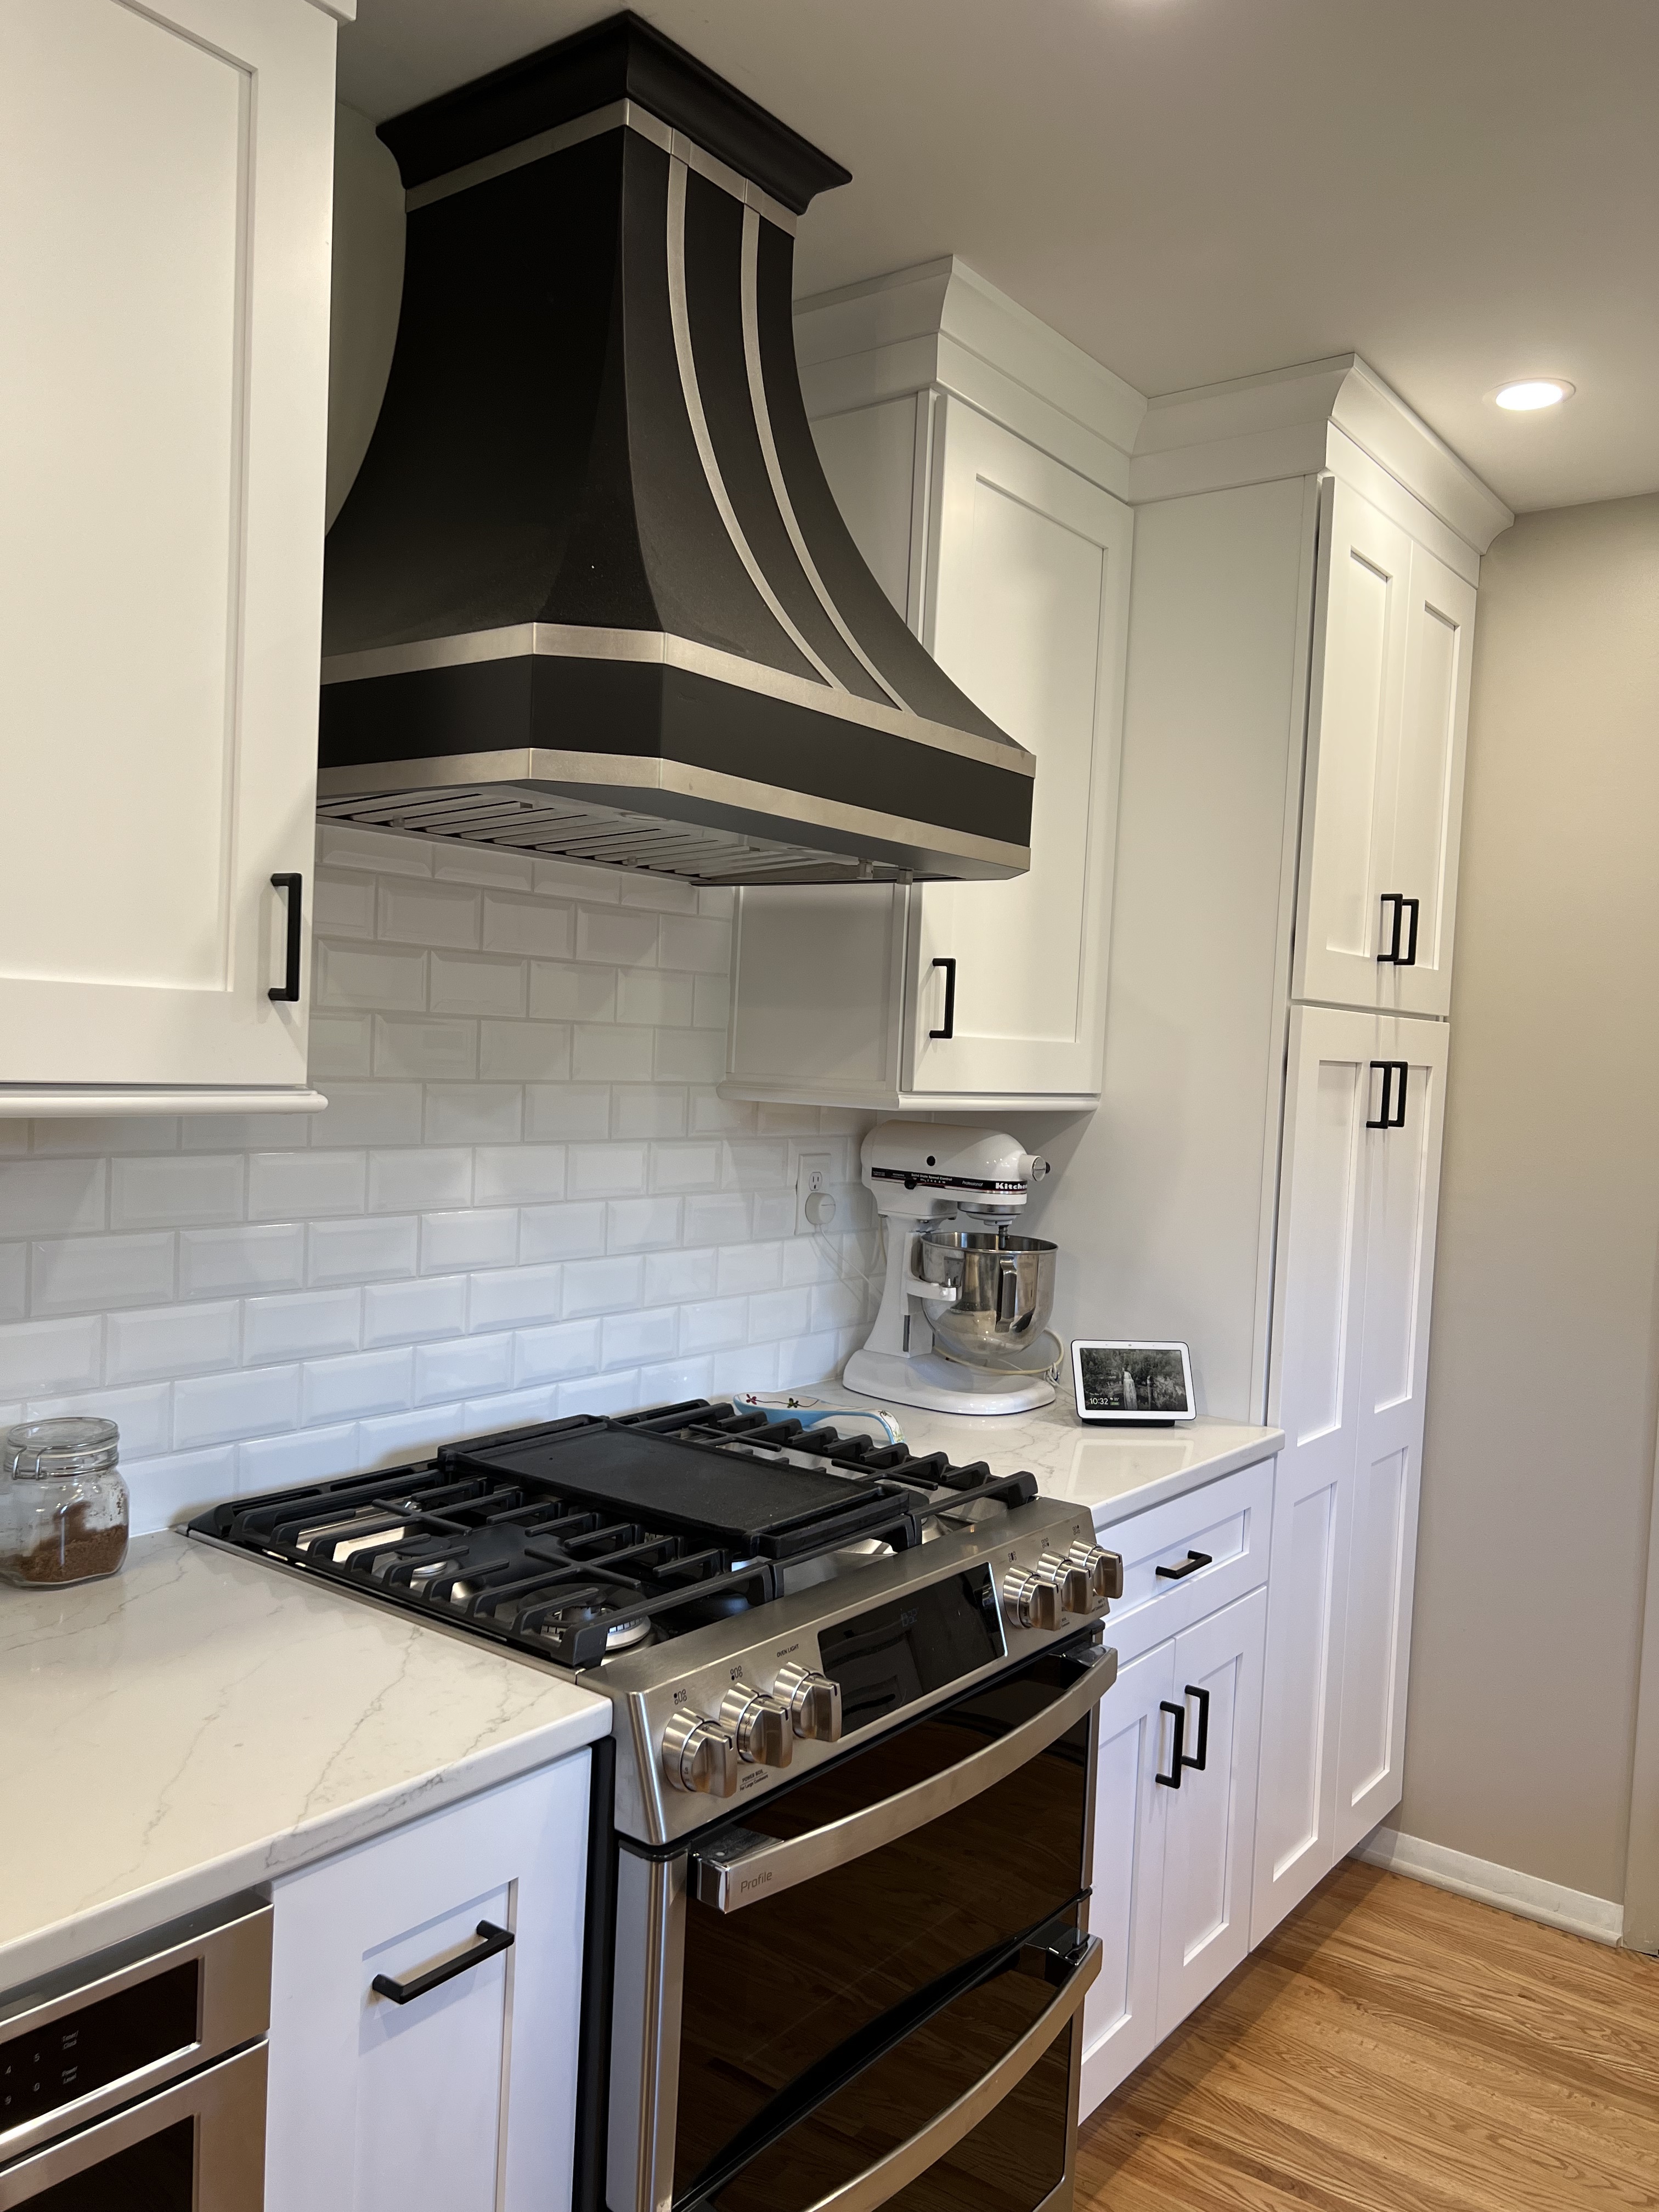 Stunning design idea french-inspired , featuring white kitchen cabinets, black kitchen countertops, and white tile backsplash, with stylish range hoods,